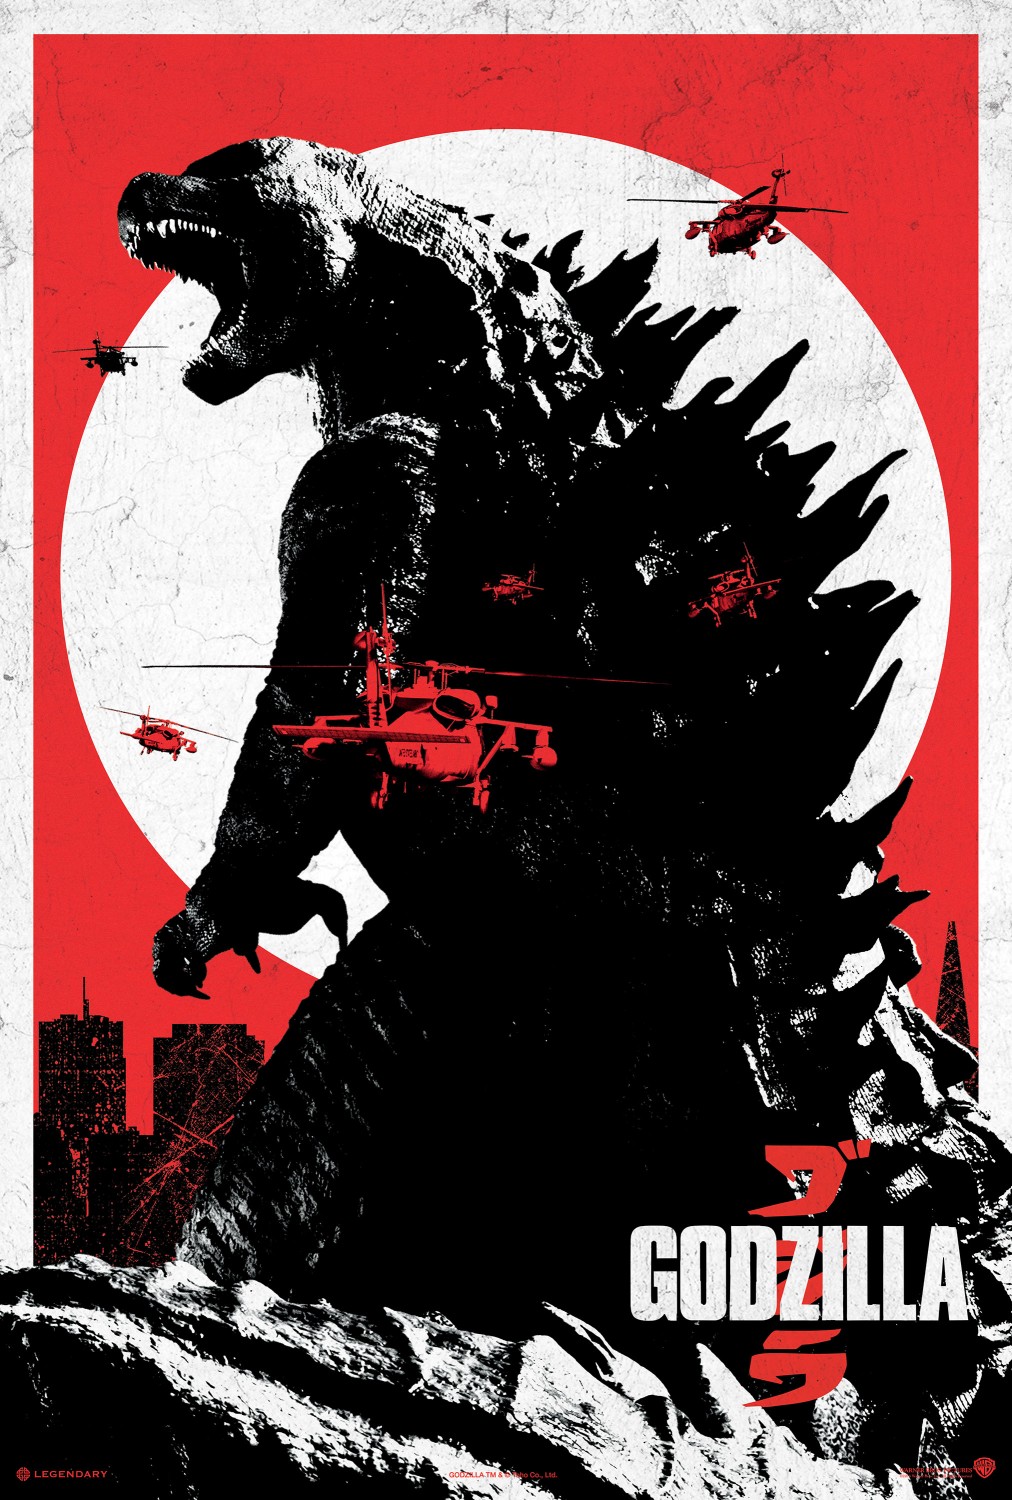 Extra Large Movie Poster Image for Godzilla (#14 of 22)